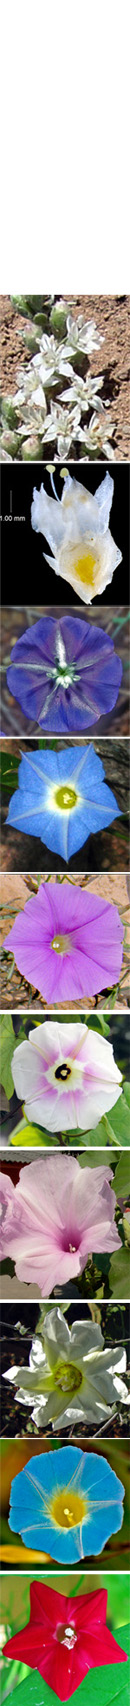 20612 Convolv banner2 - Convolvulaceae (morning glories) of Sonora, Mexico